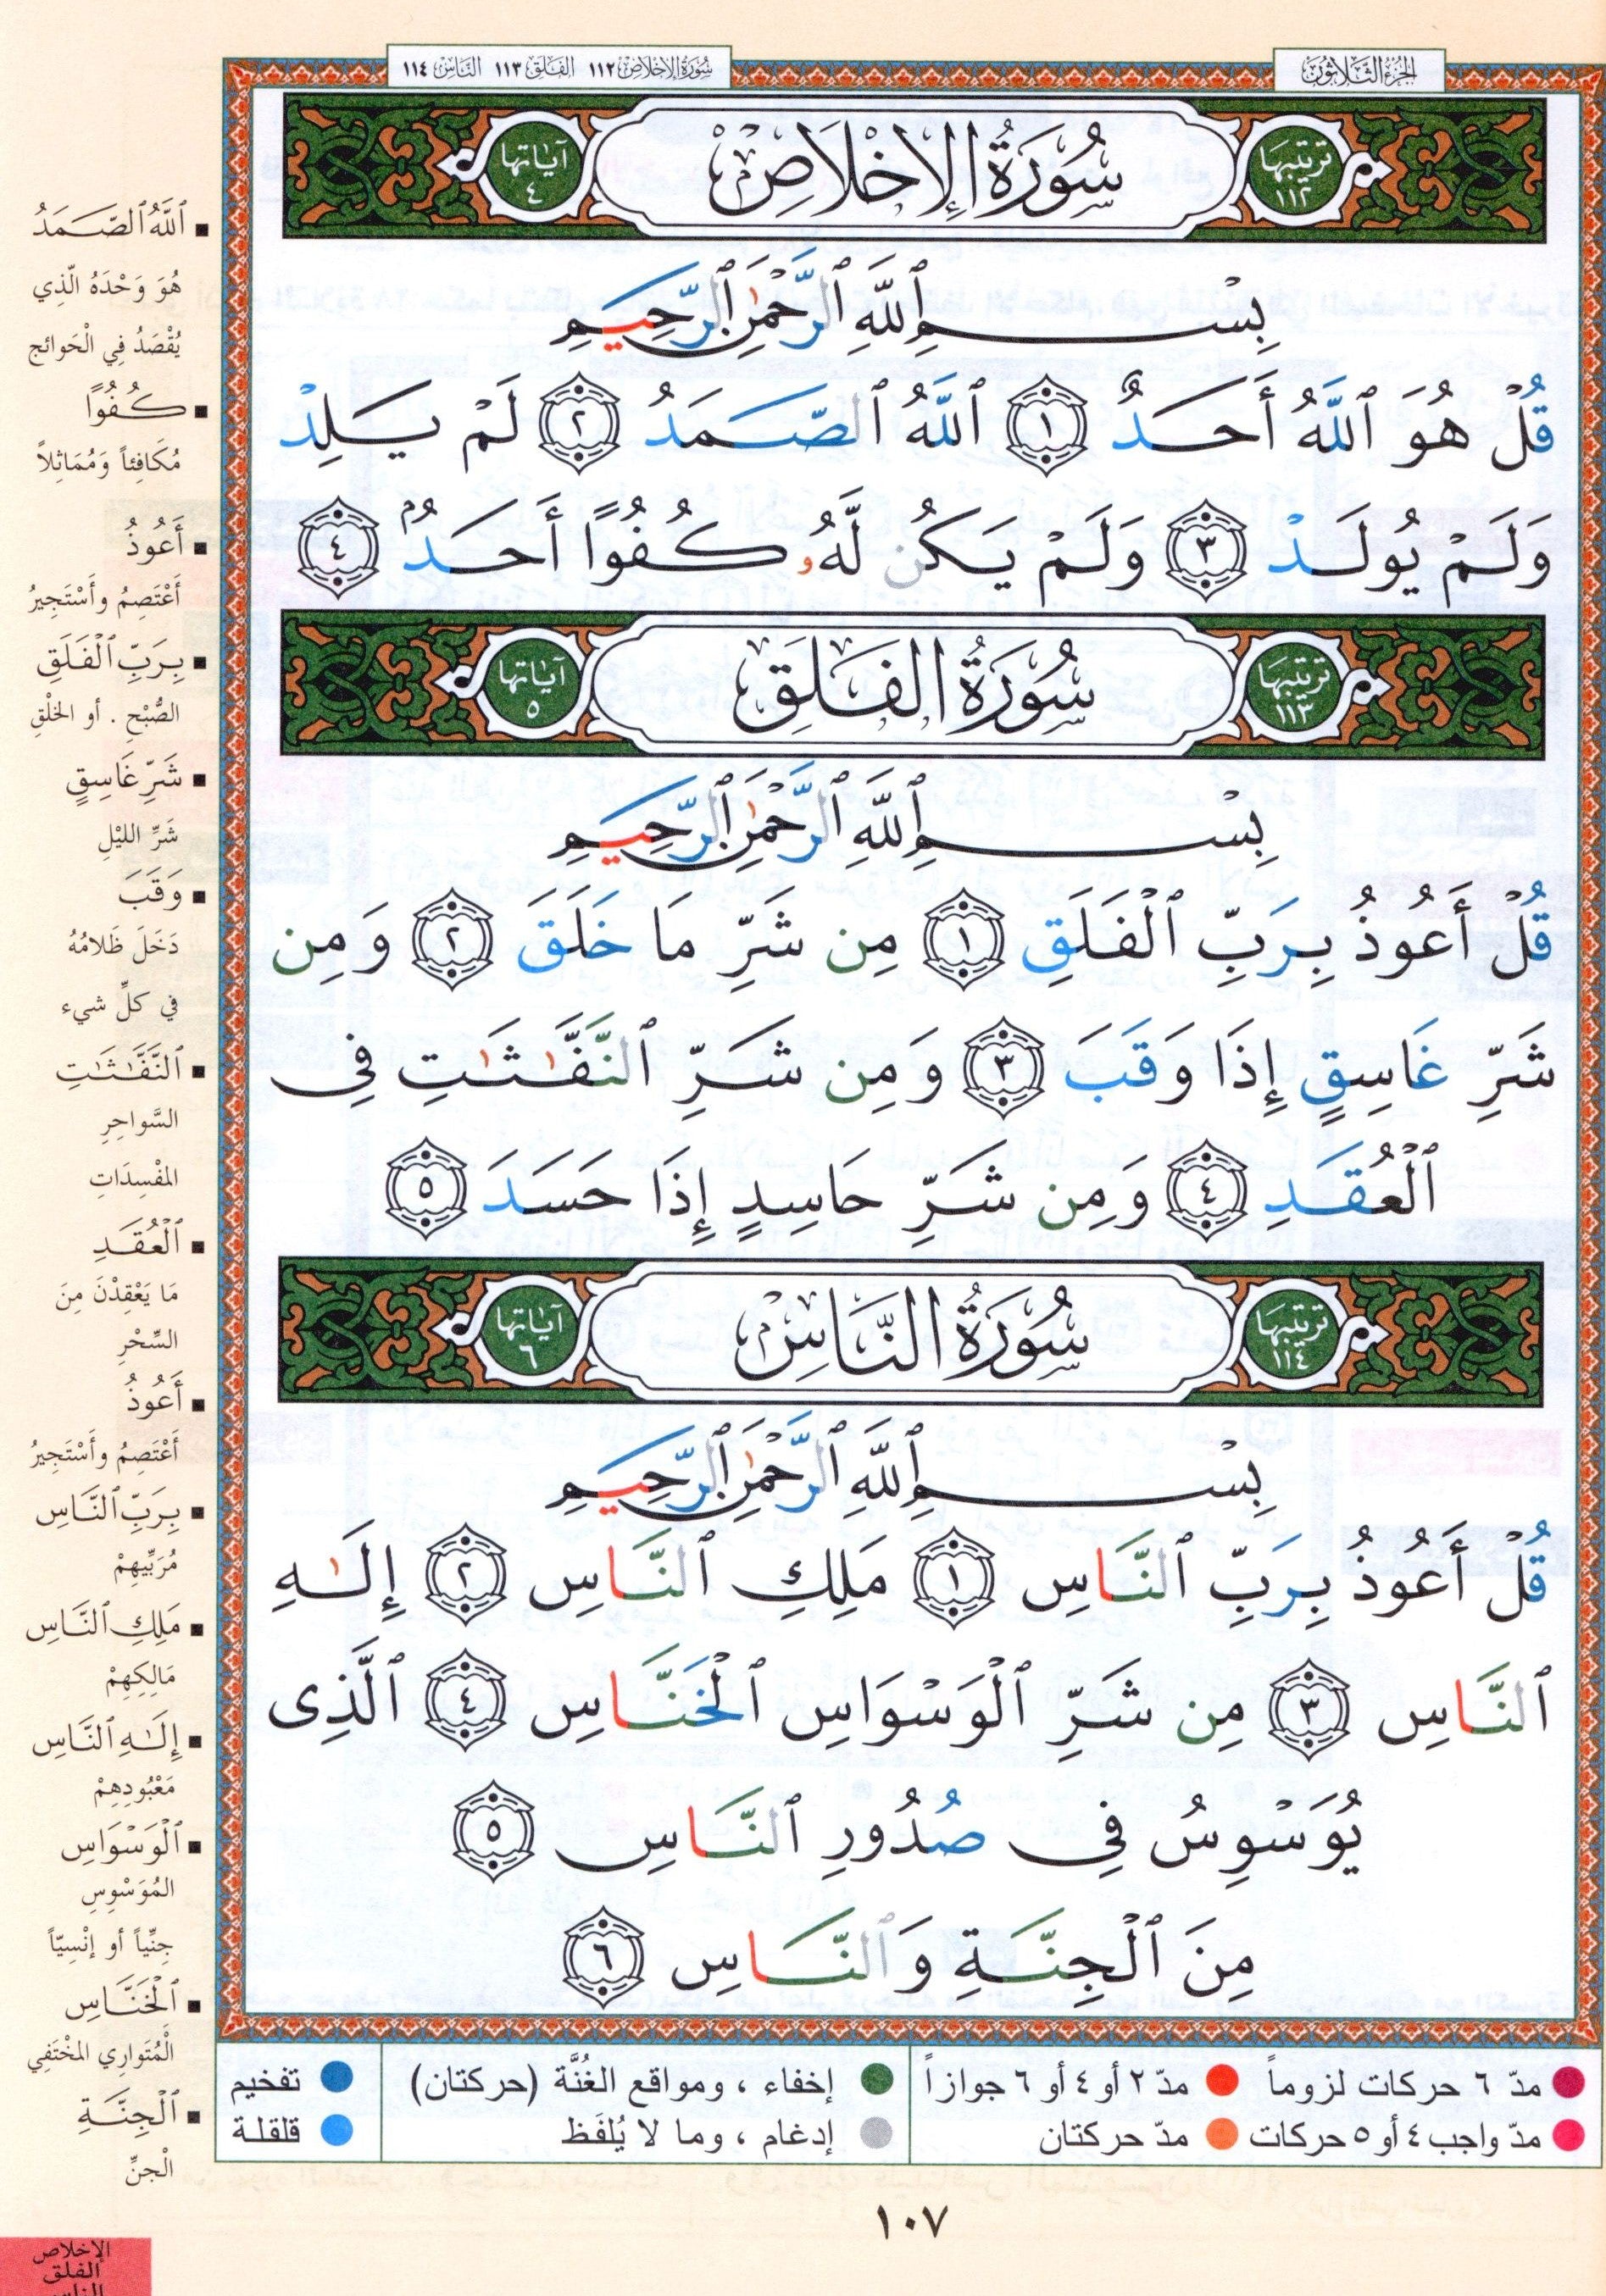 Color Coded Tajweed Quran From Surah Al-Ahqaf to Surah Al-Nas Parts 26 to 30 Size 7" x 9" مصحف التجويد